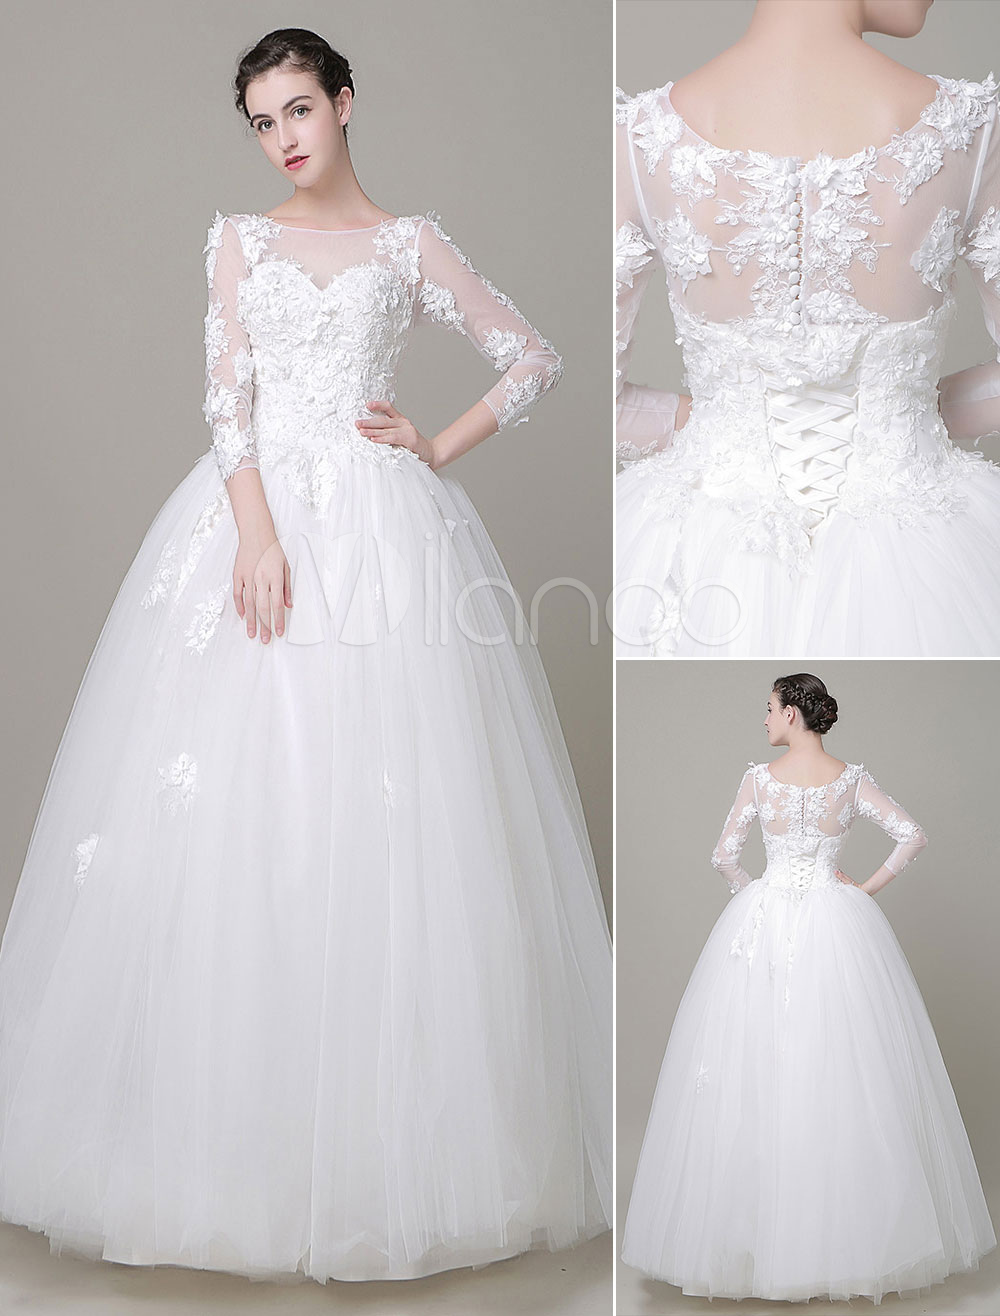 Lace Wedding Dress A-Line Long Sleeves Flower Beading Floor Length Bridal Dress photo